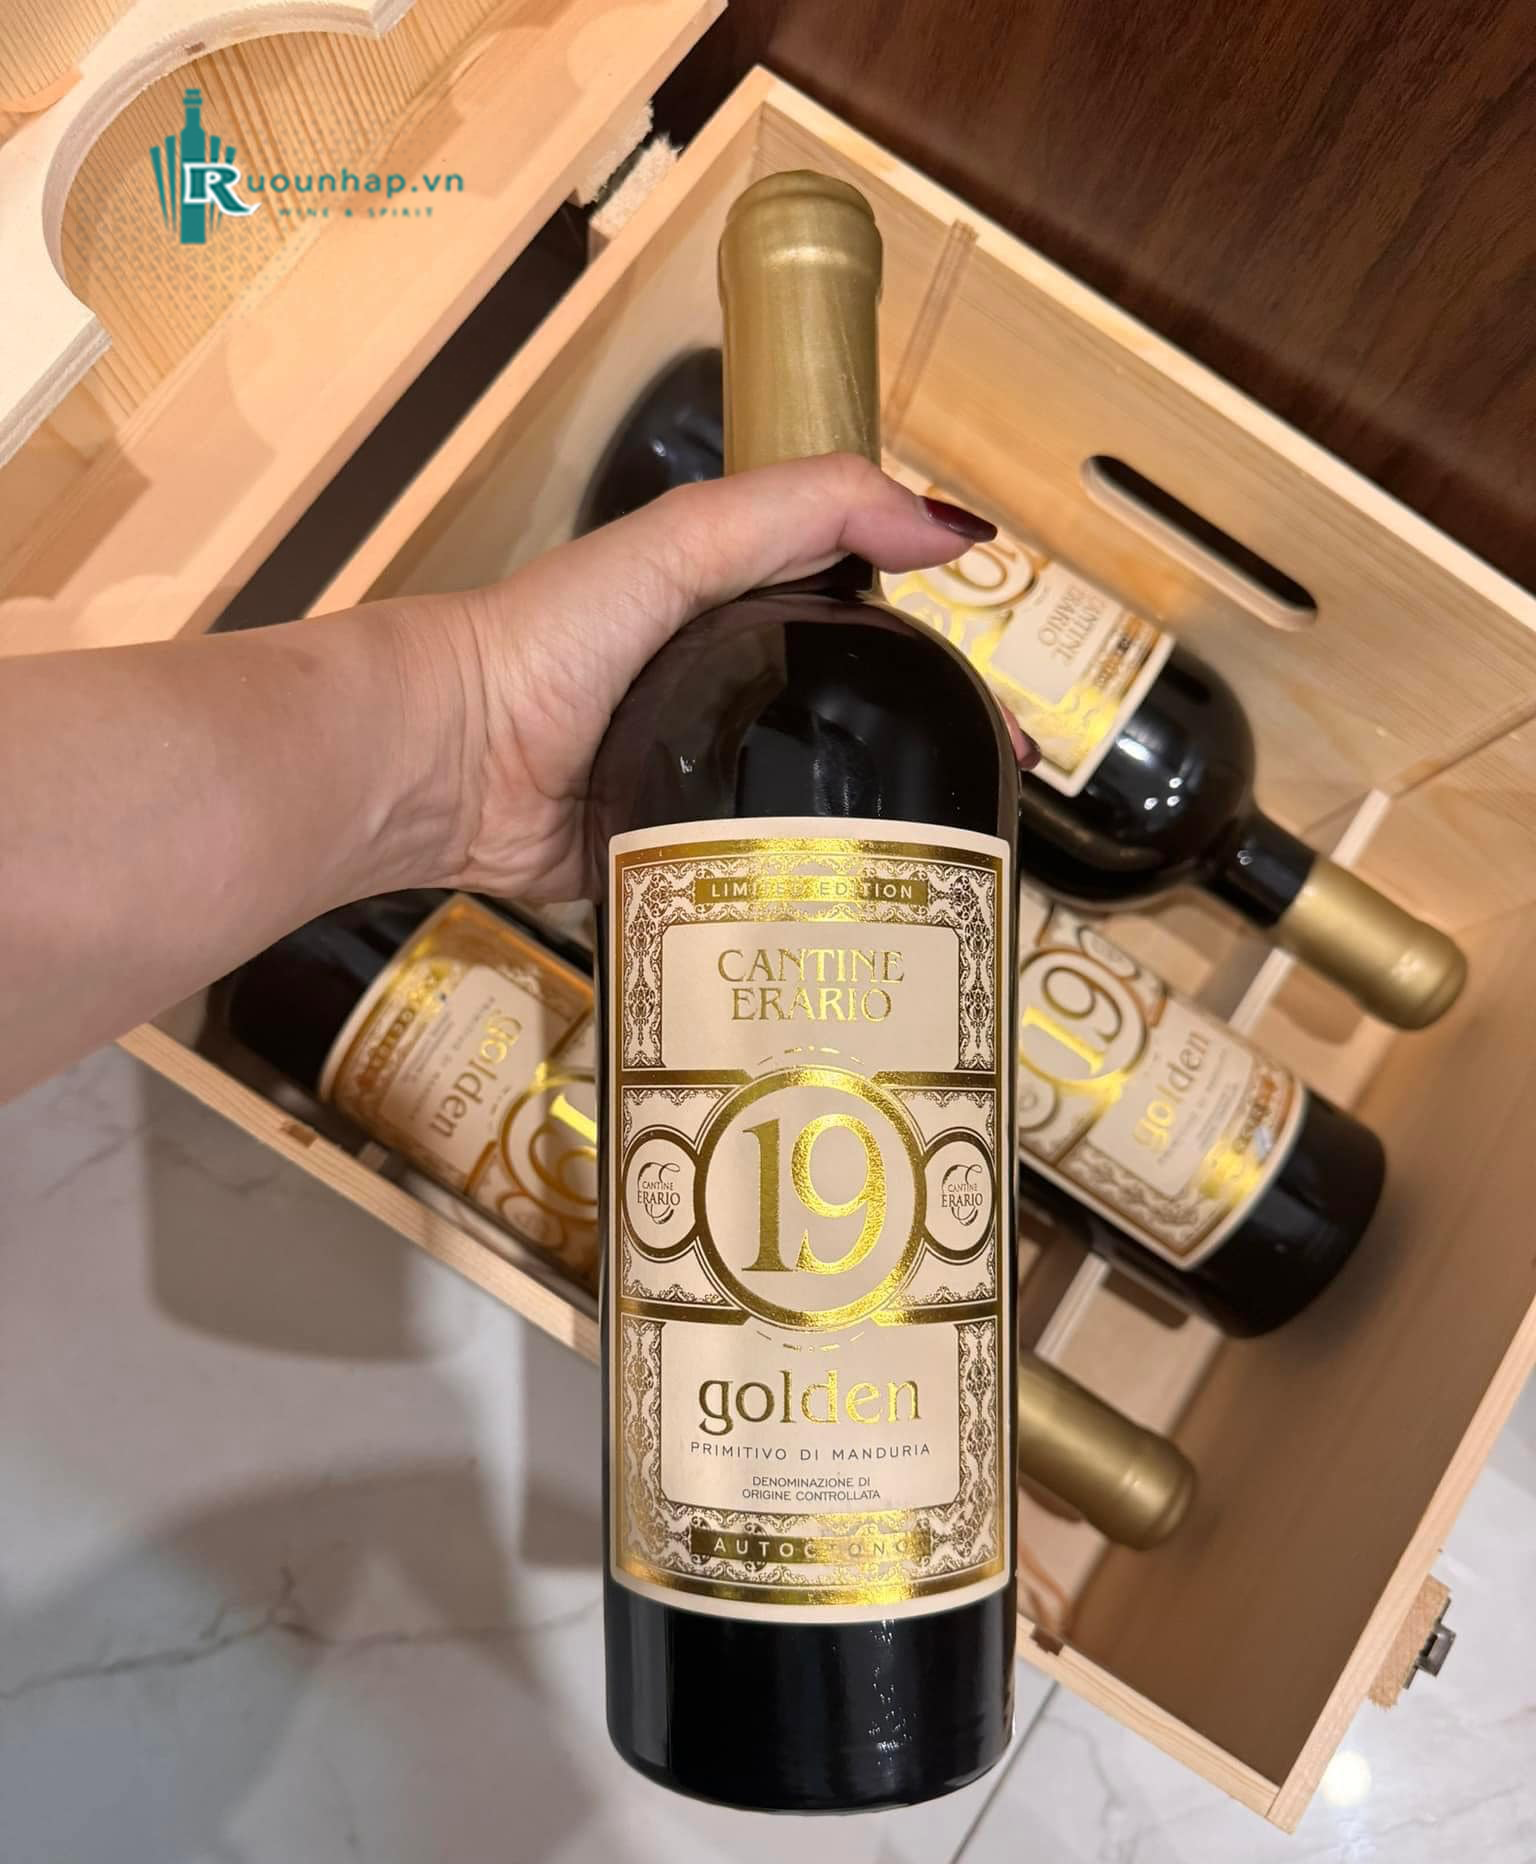 Rượu Vang Cantine Erario Golden 19 độ